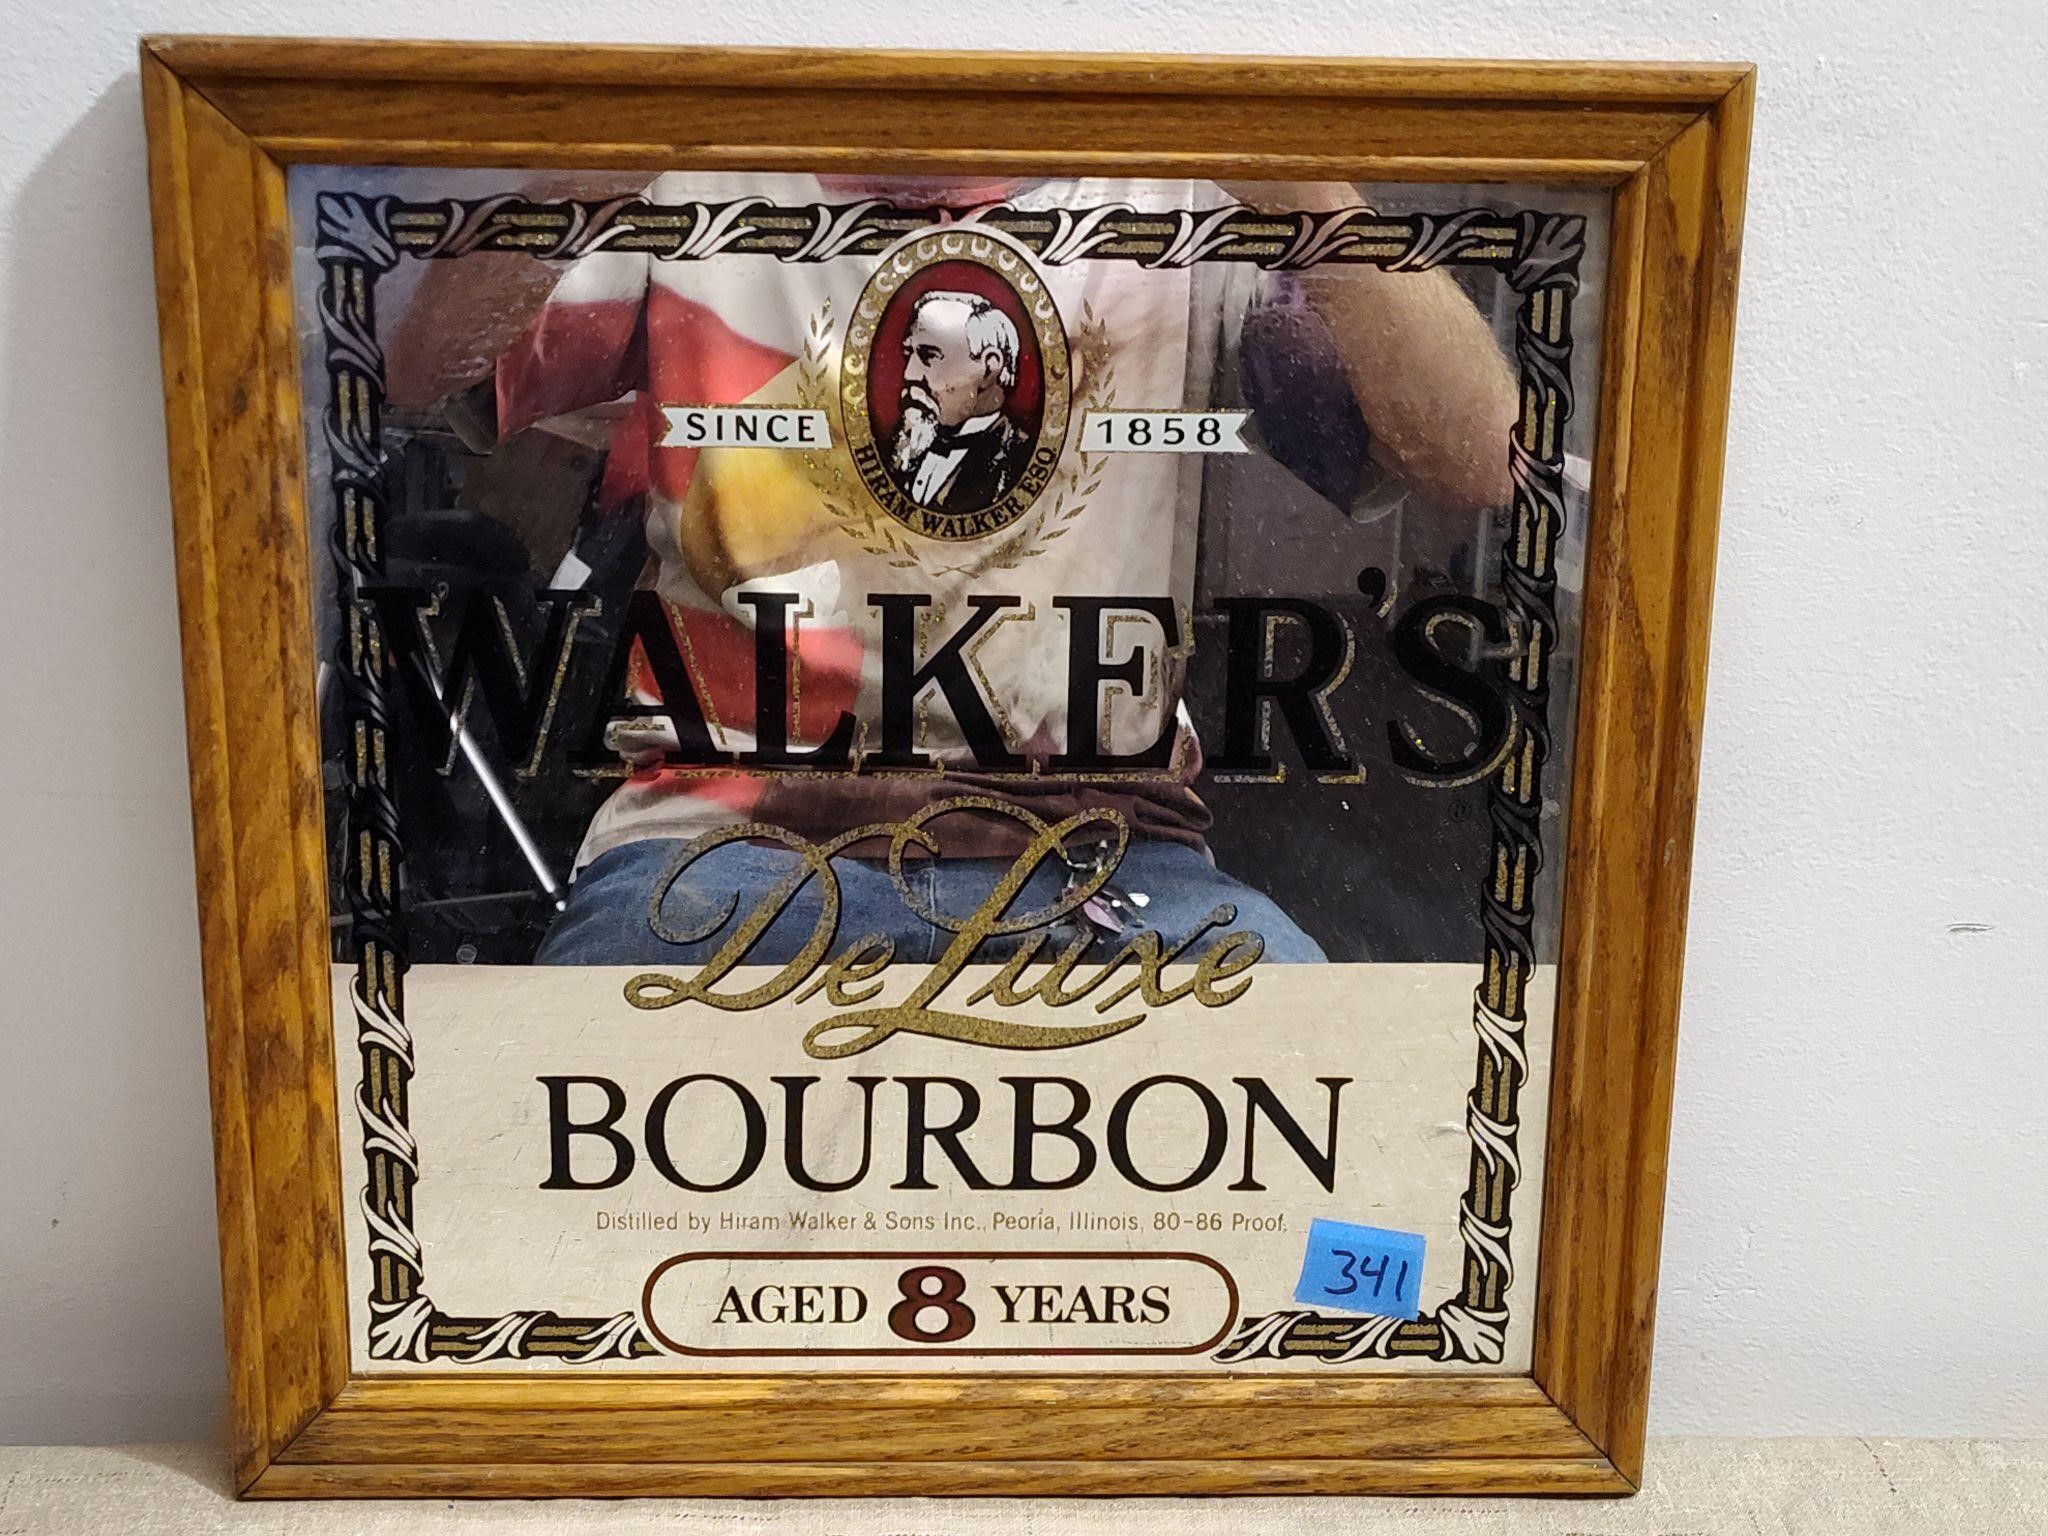 Walker's Bourbon